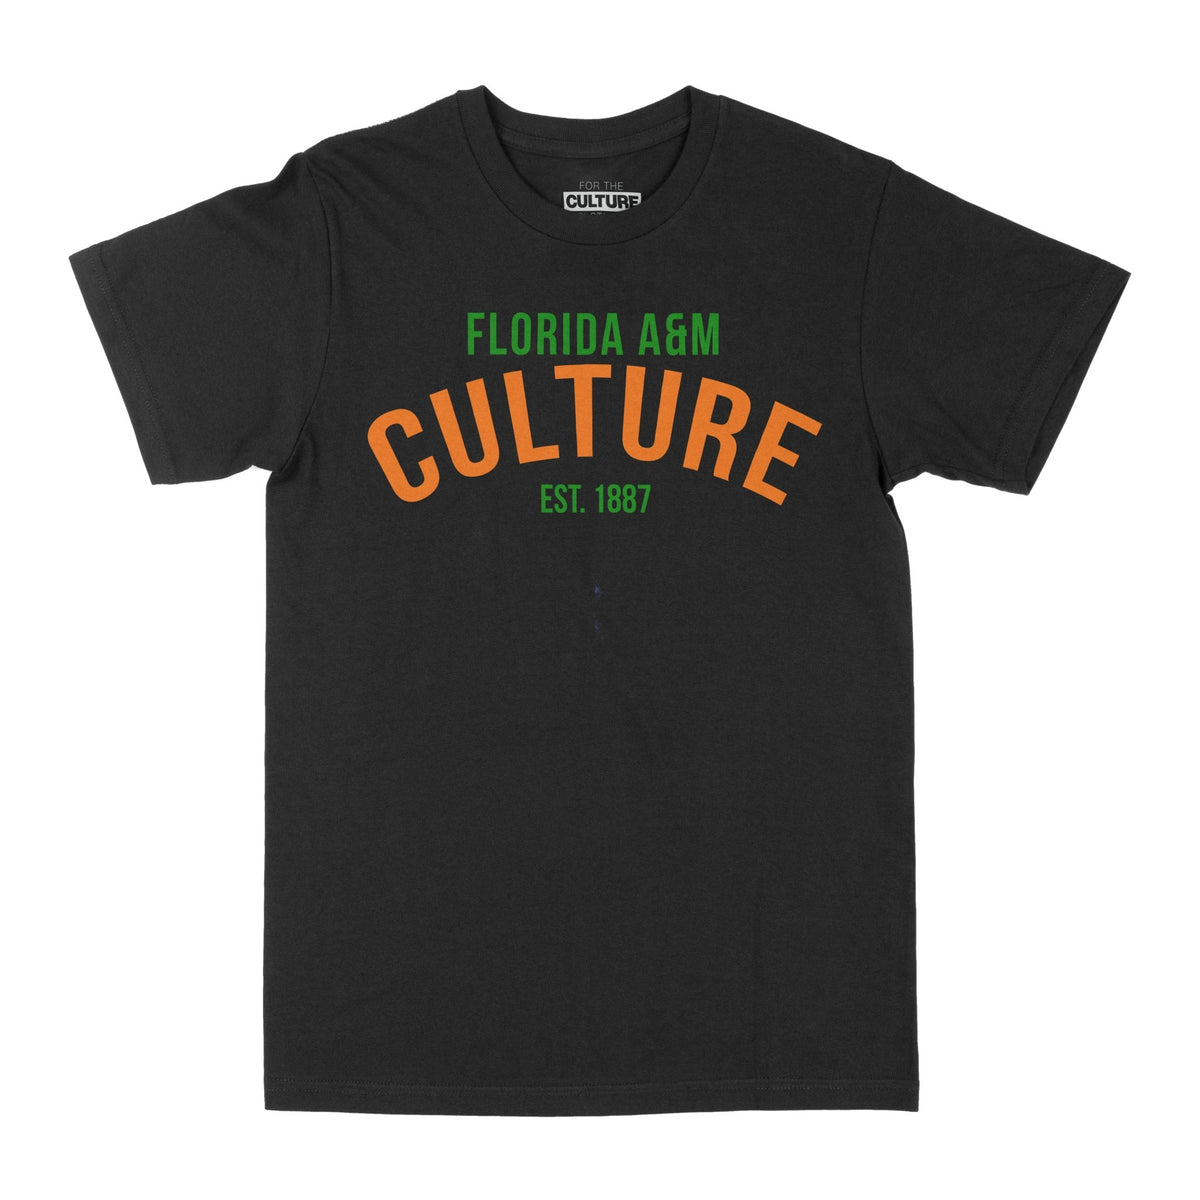 HBCU College Culture Florida A&M - T-Shirt - For The Culture Clothing Inc.